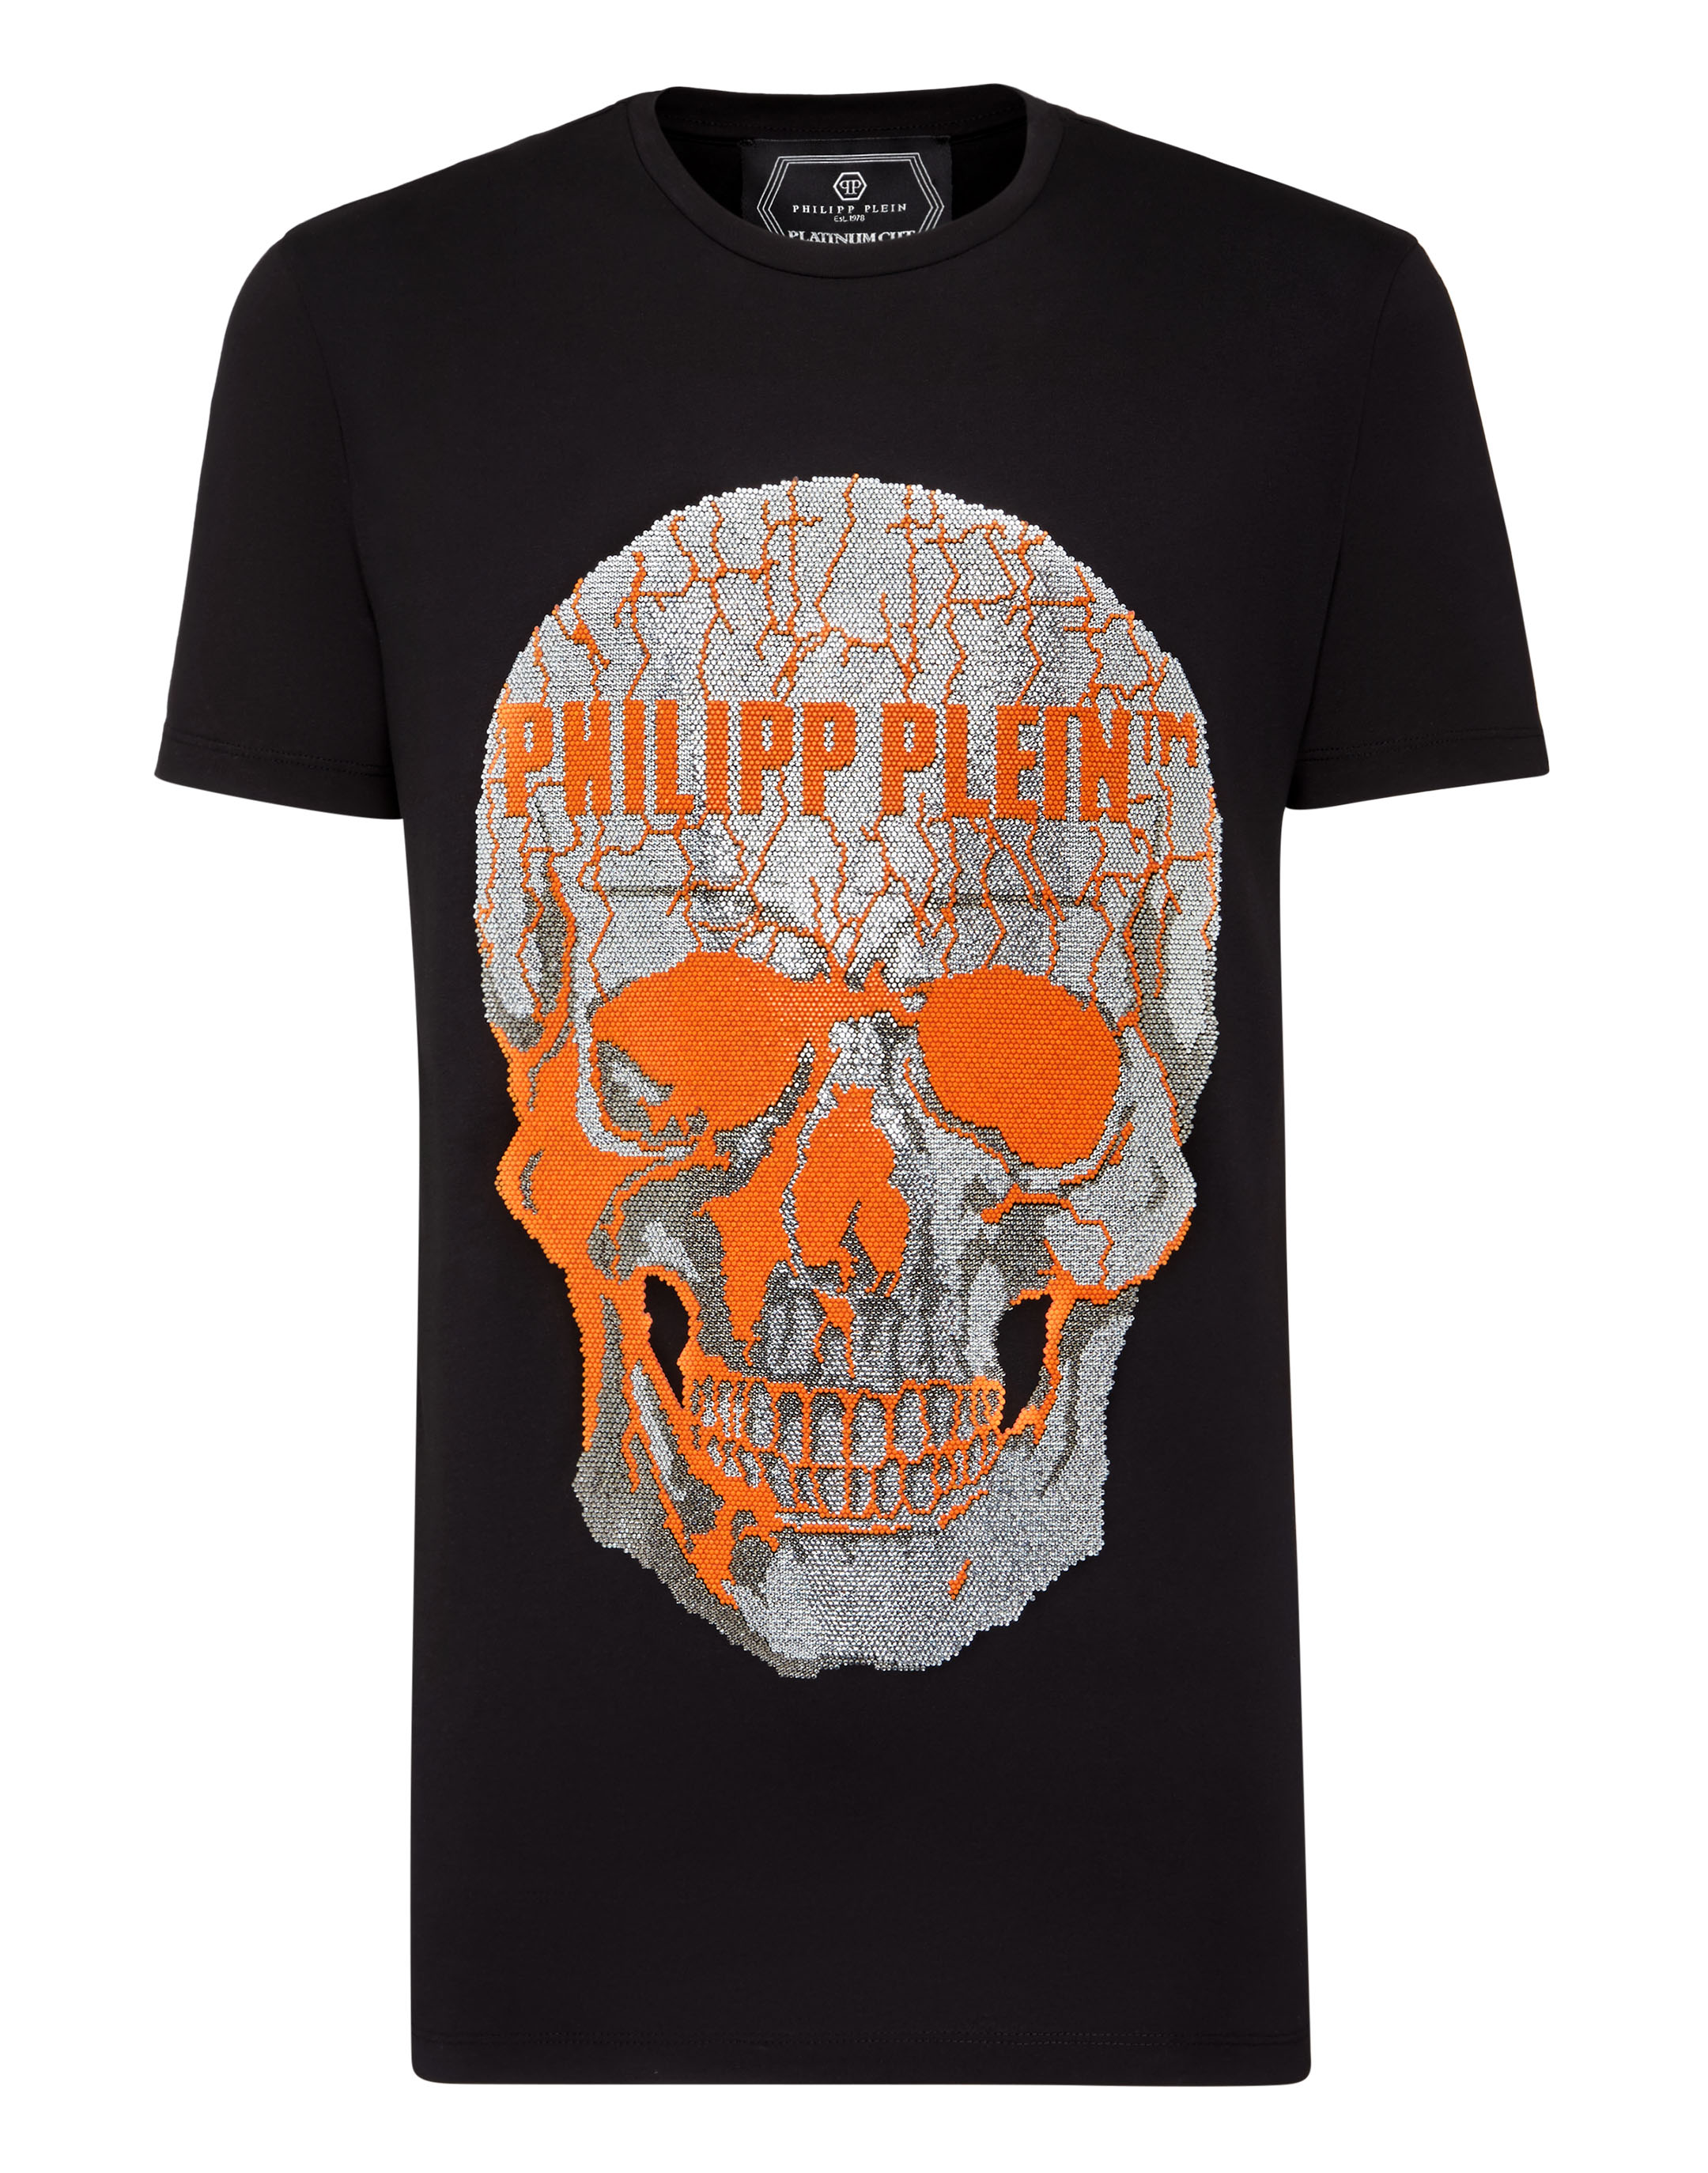 Philipp Plein T Shirt Orange Clearance, SAVE 49% - mpgc.net